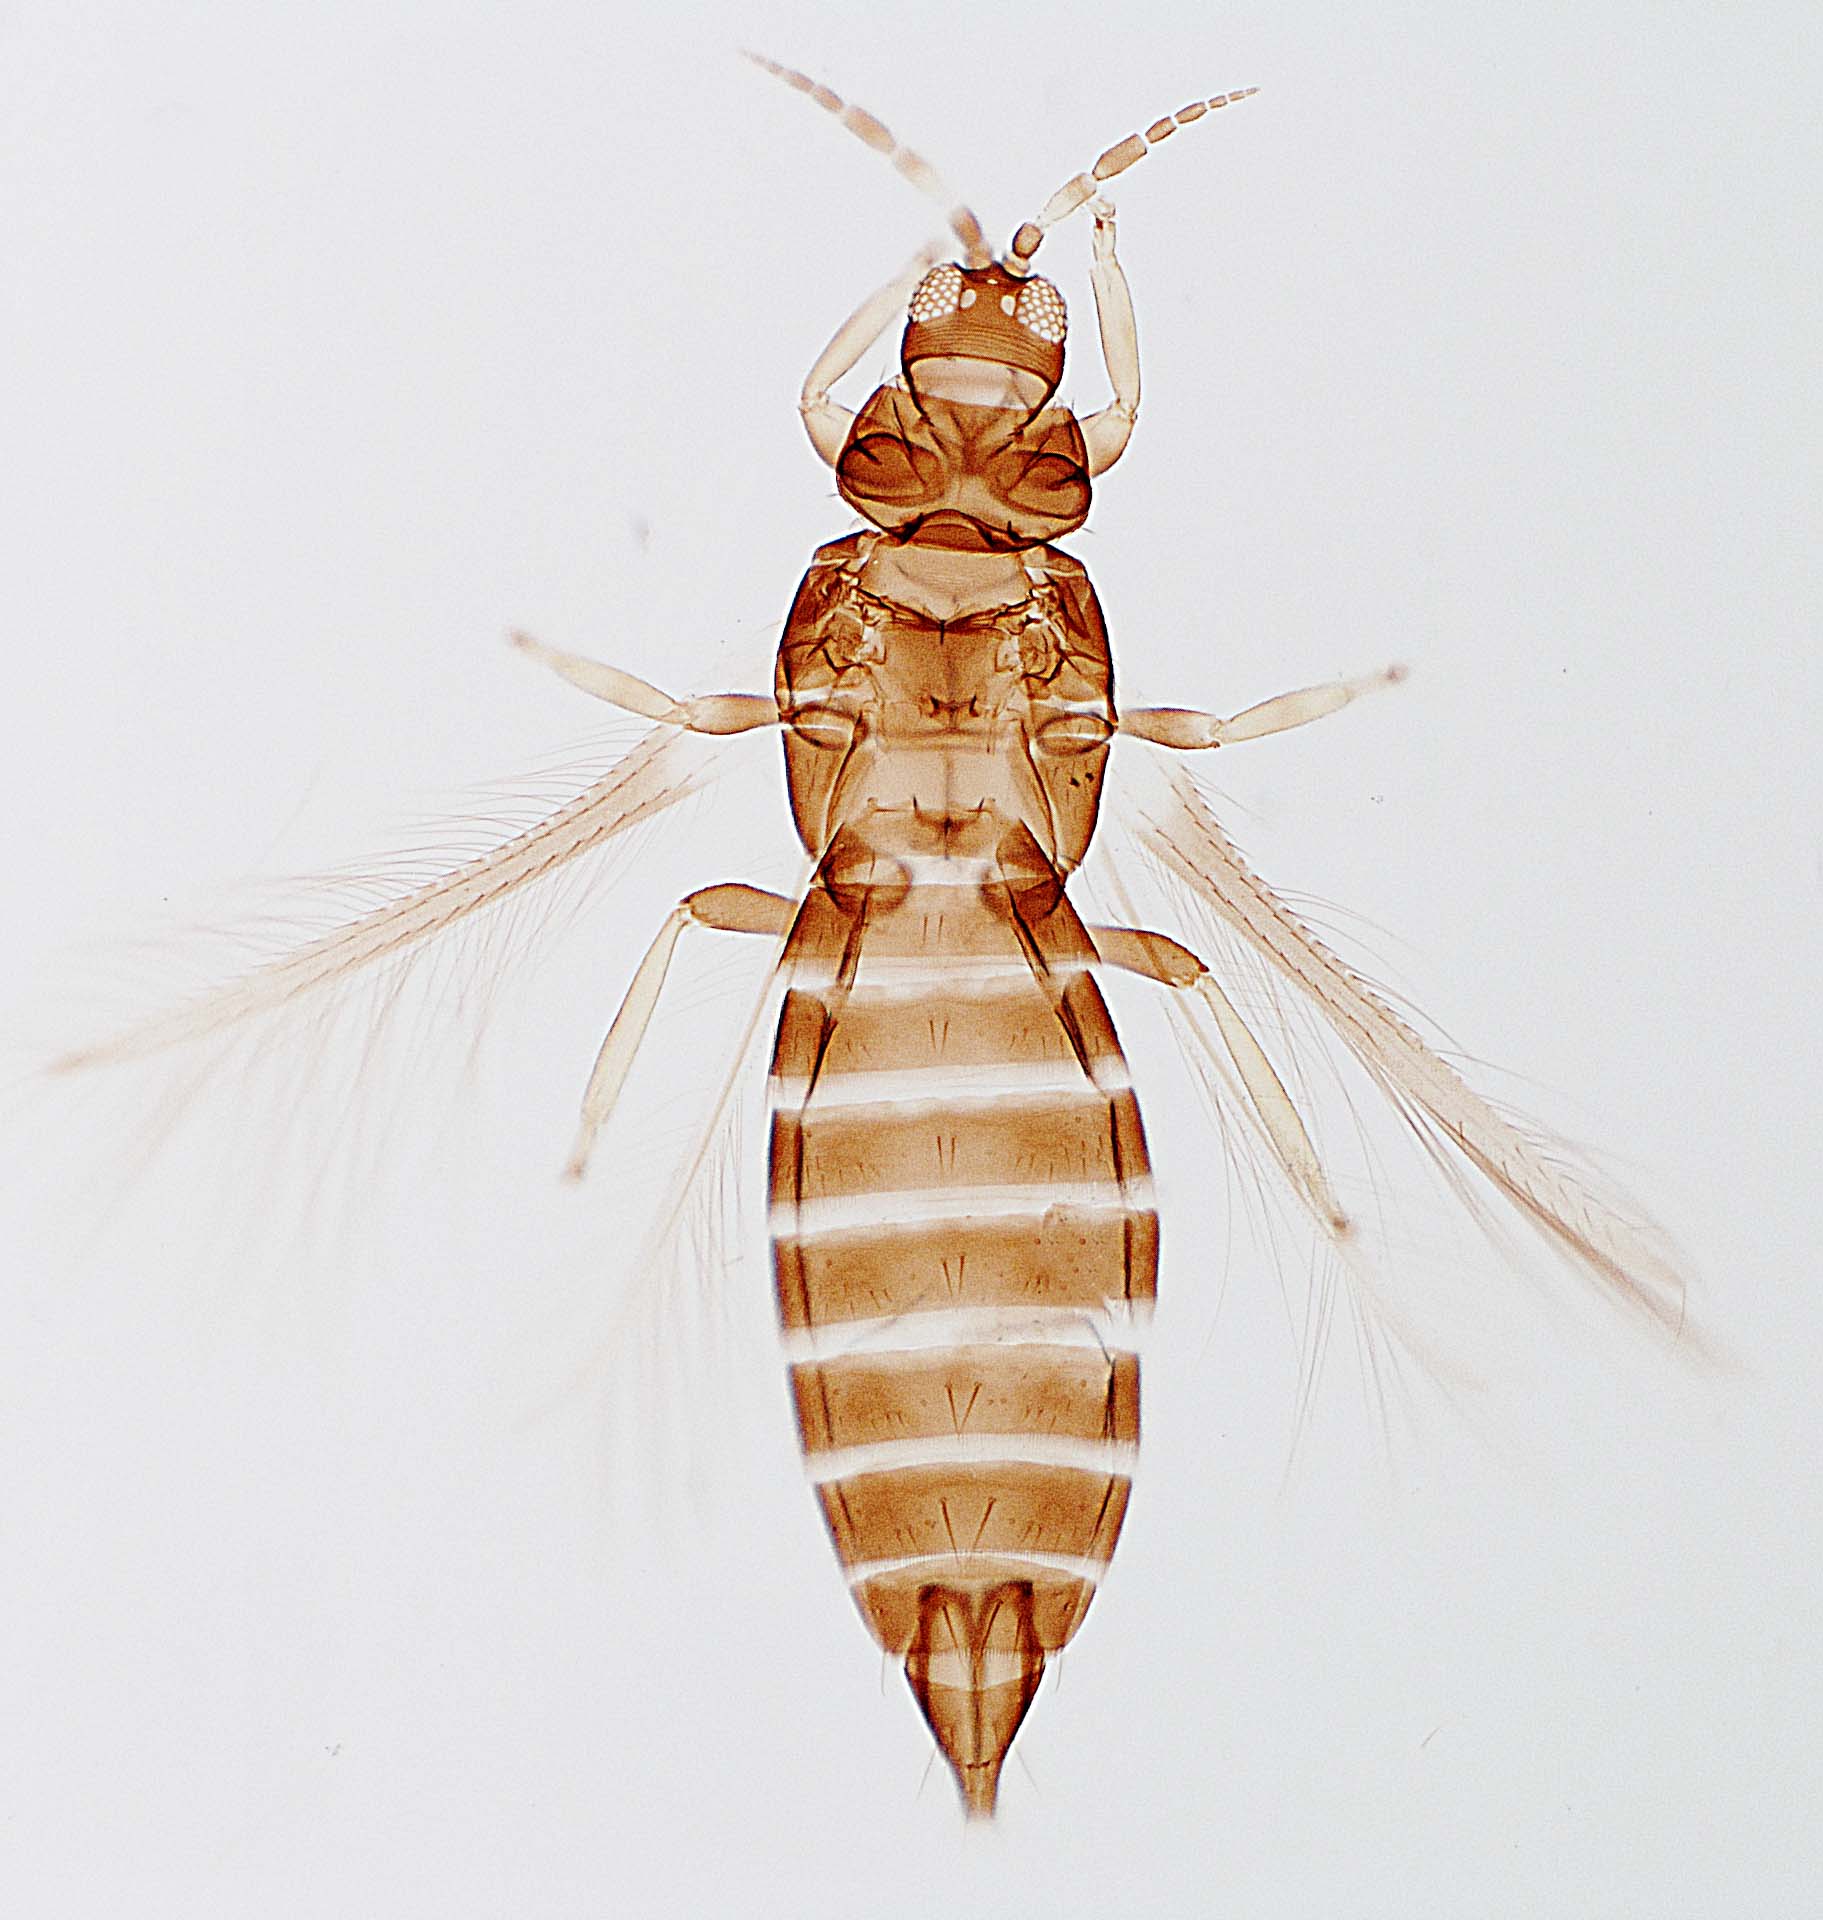 Lenkothrips mollinediae